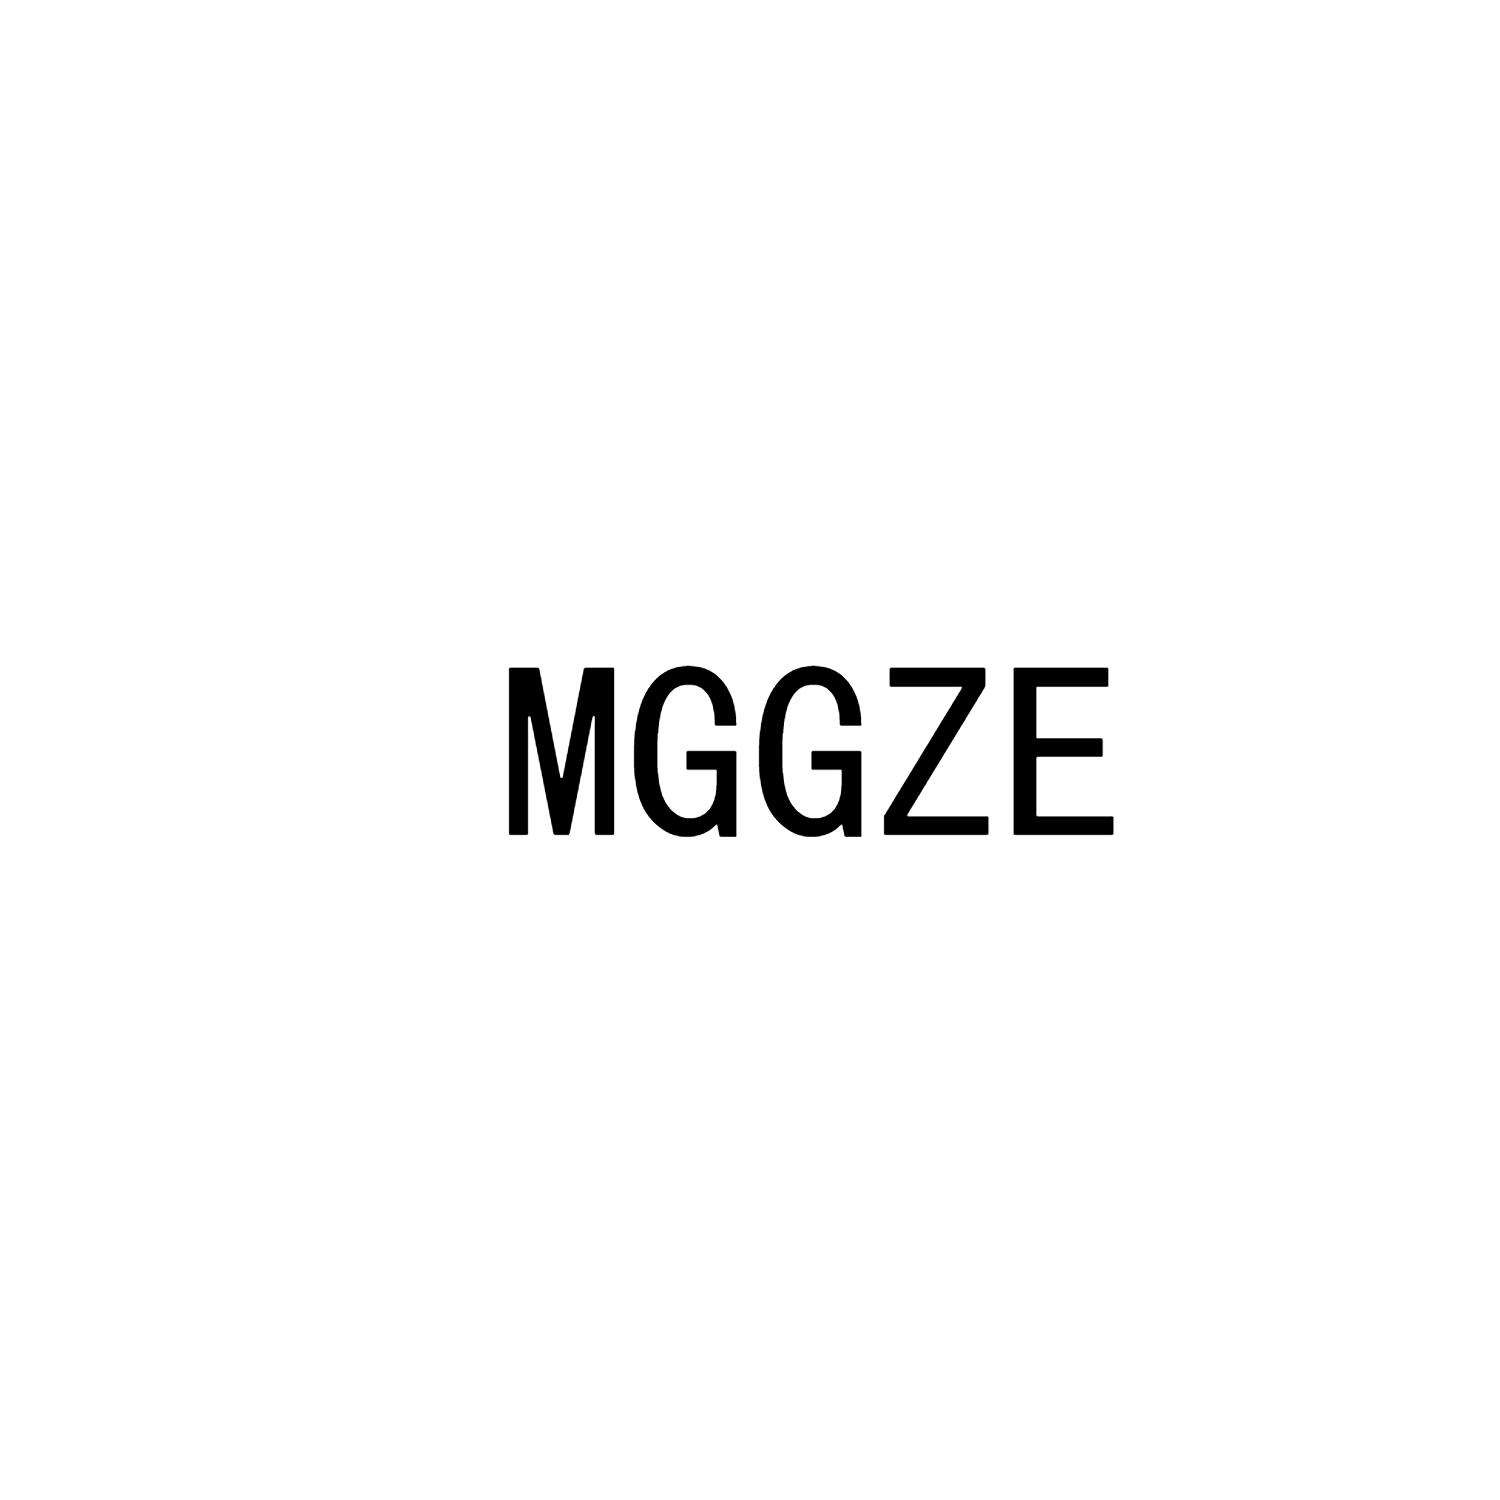 40类-材料加工MGGZE商标转让